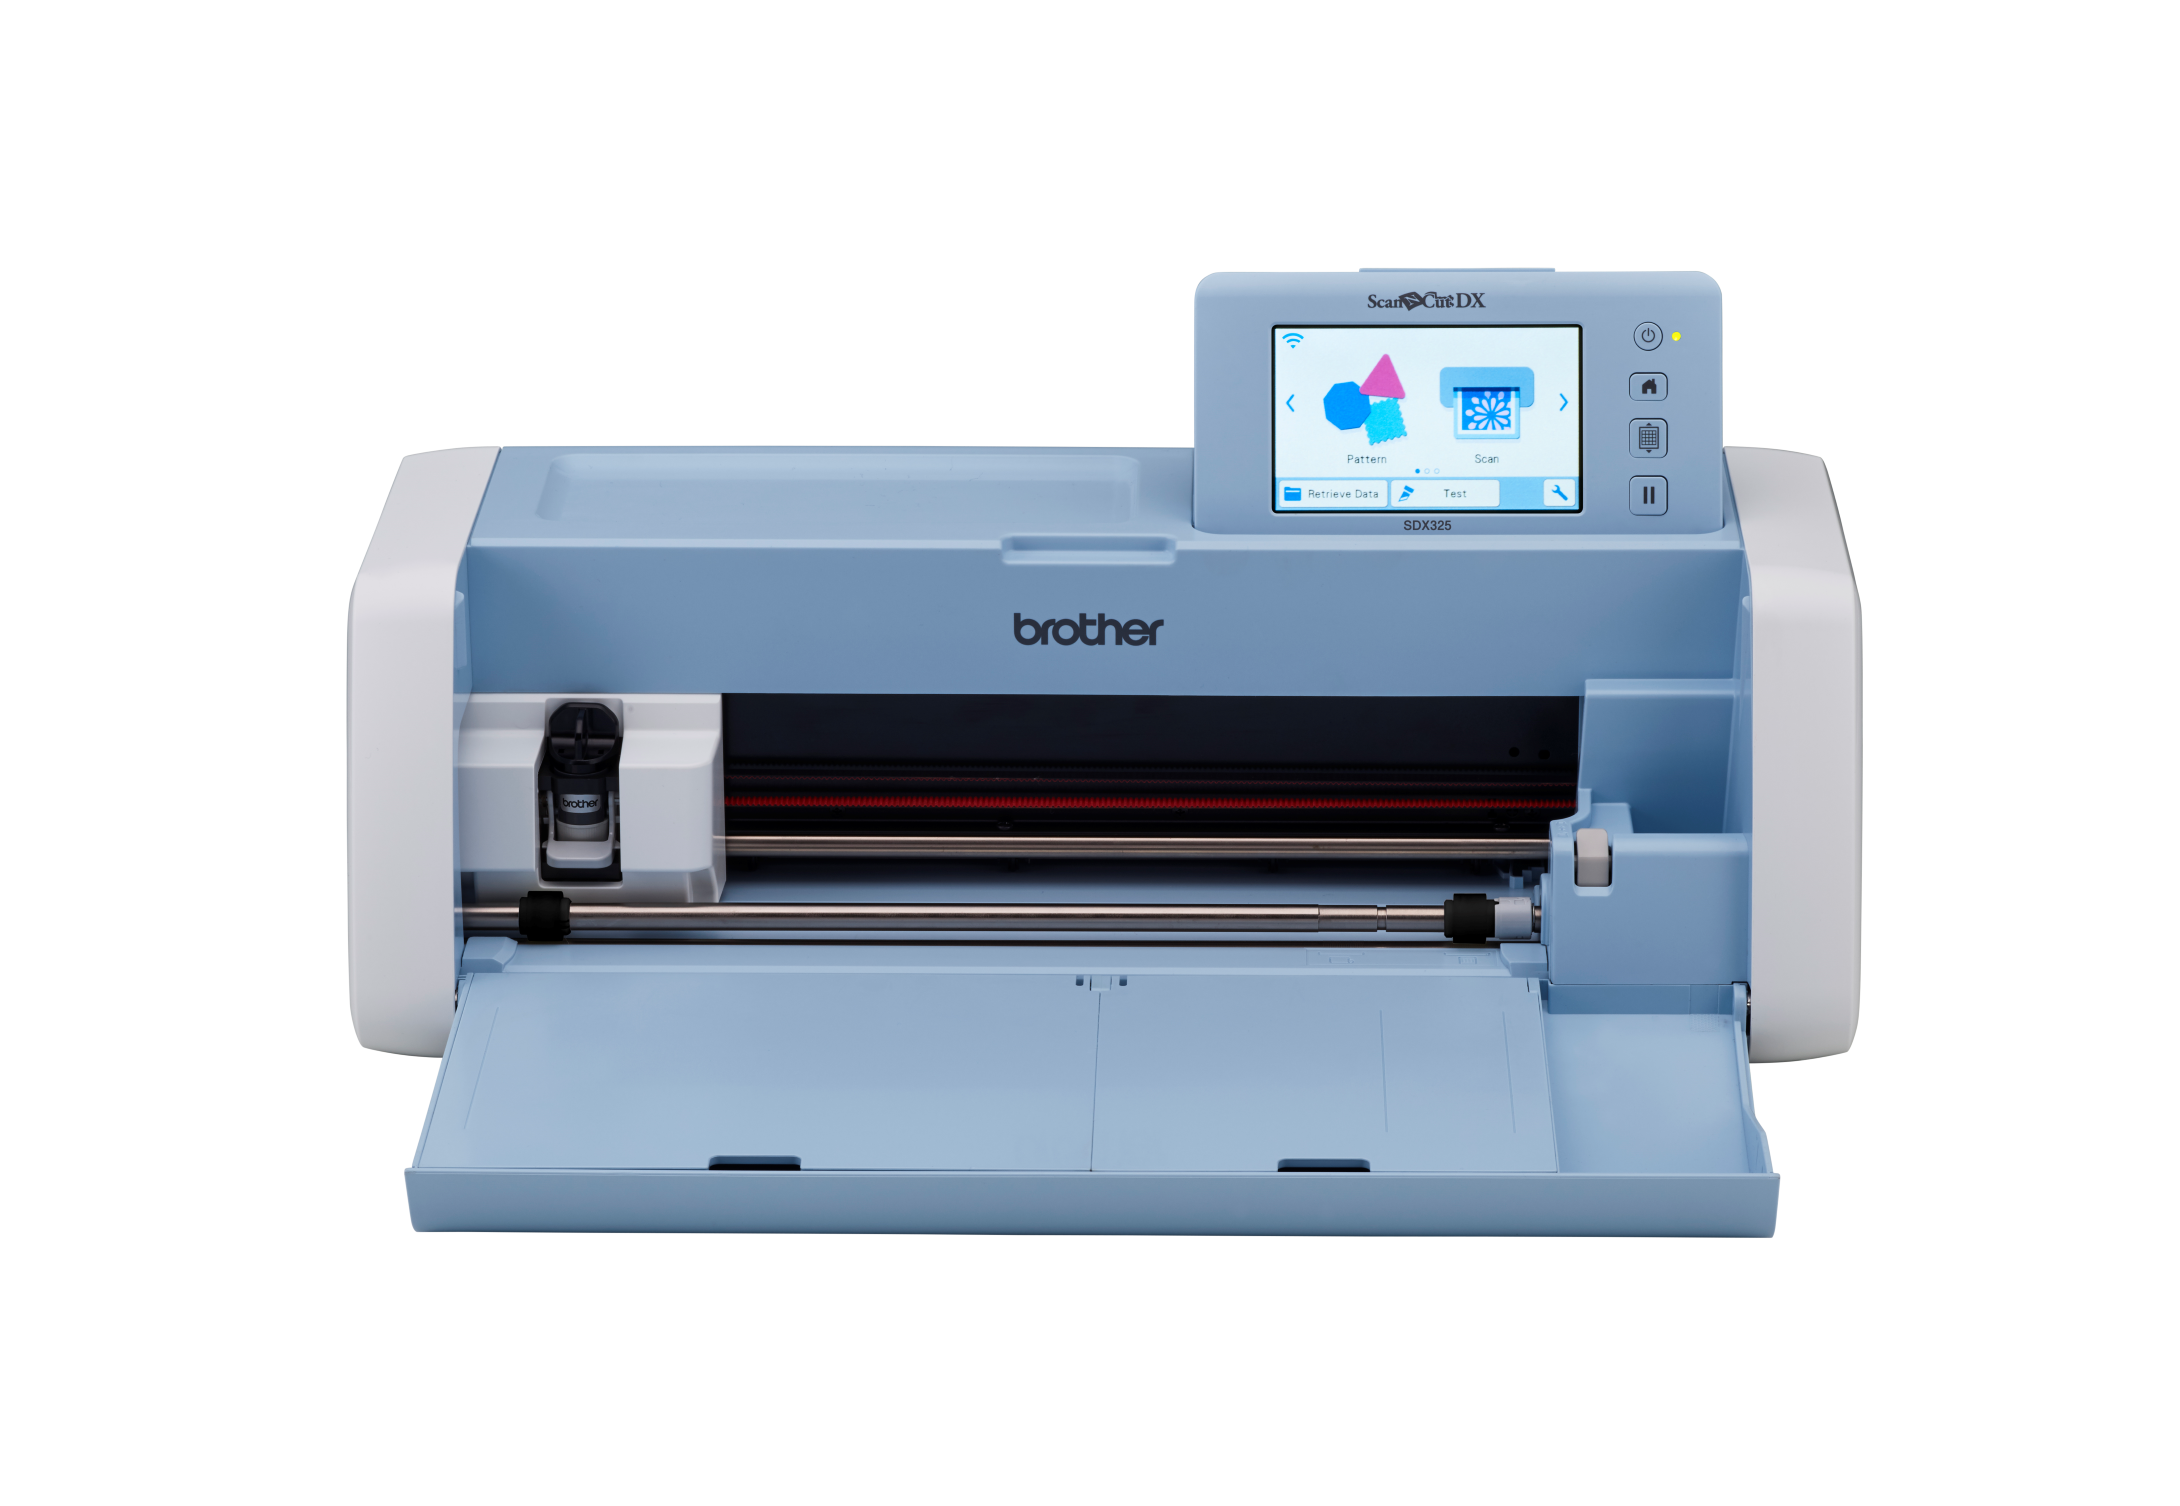 Brother SDX325 ScanNCut Craft Cutting Machine for Sale at World Weidner